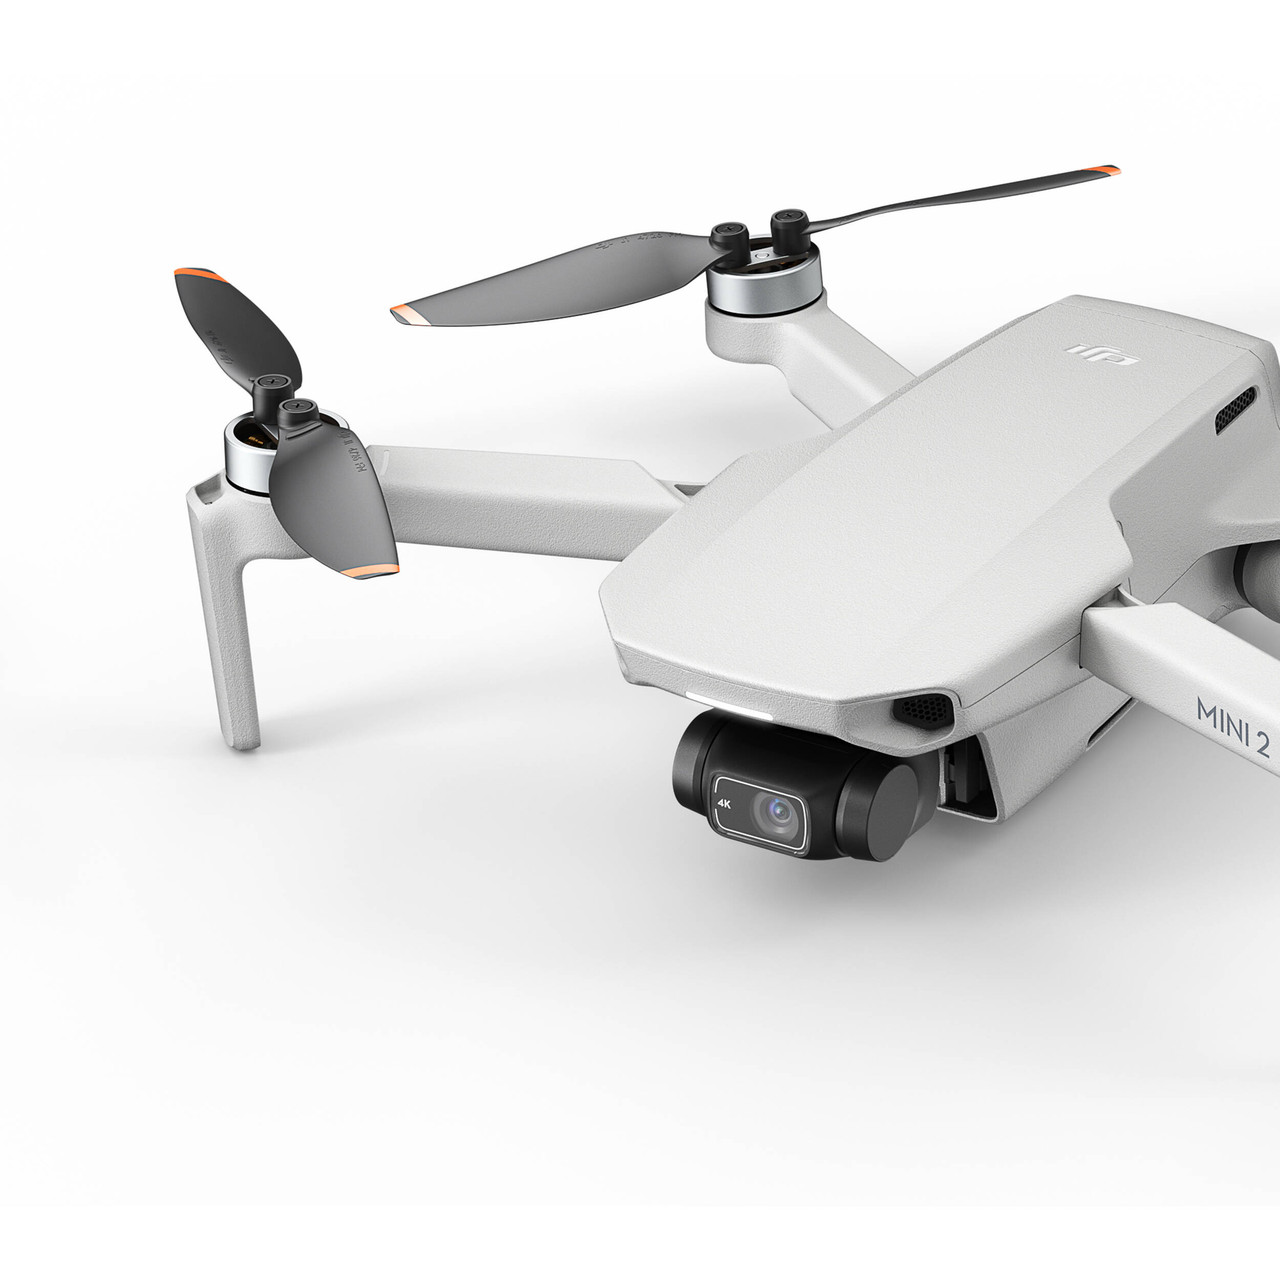 DJI Mini 2 Ultralight 3-Axis 4k Gimbal Camera Quadcopter Drone